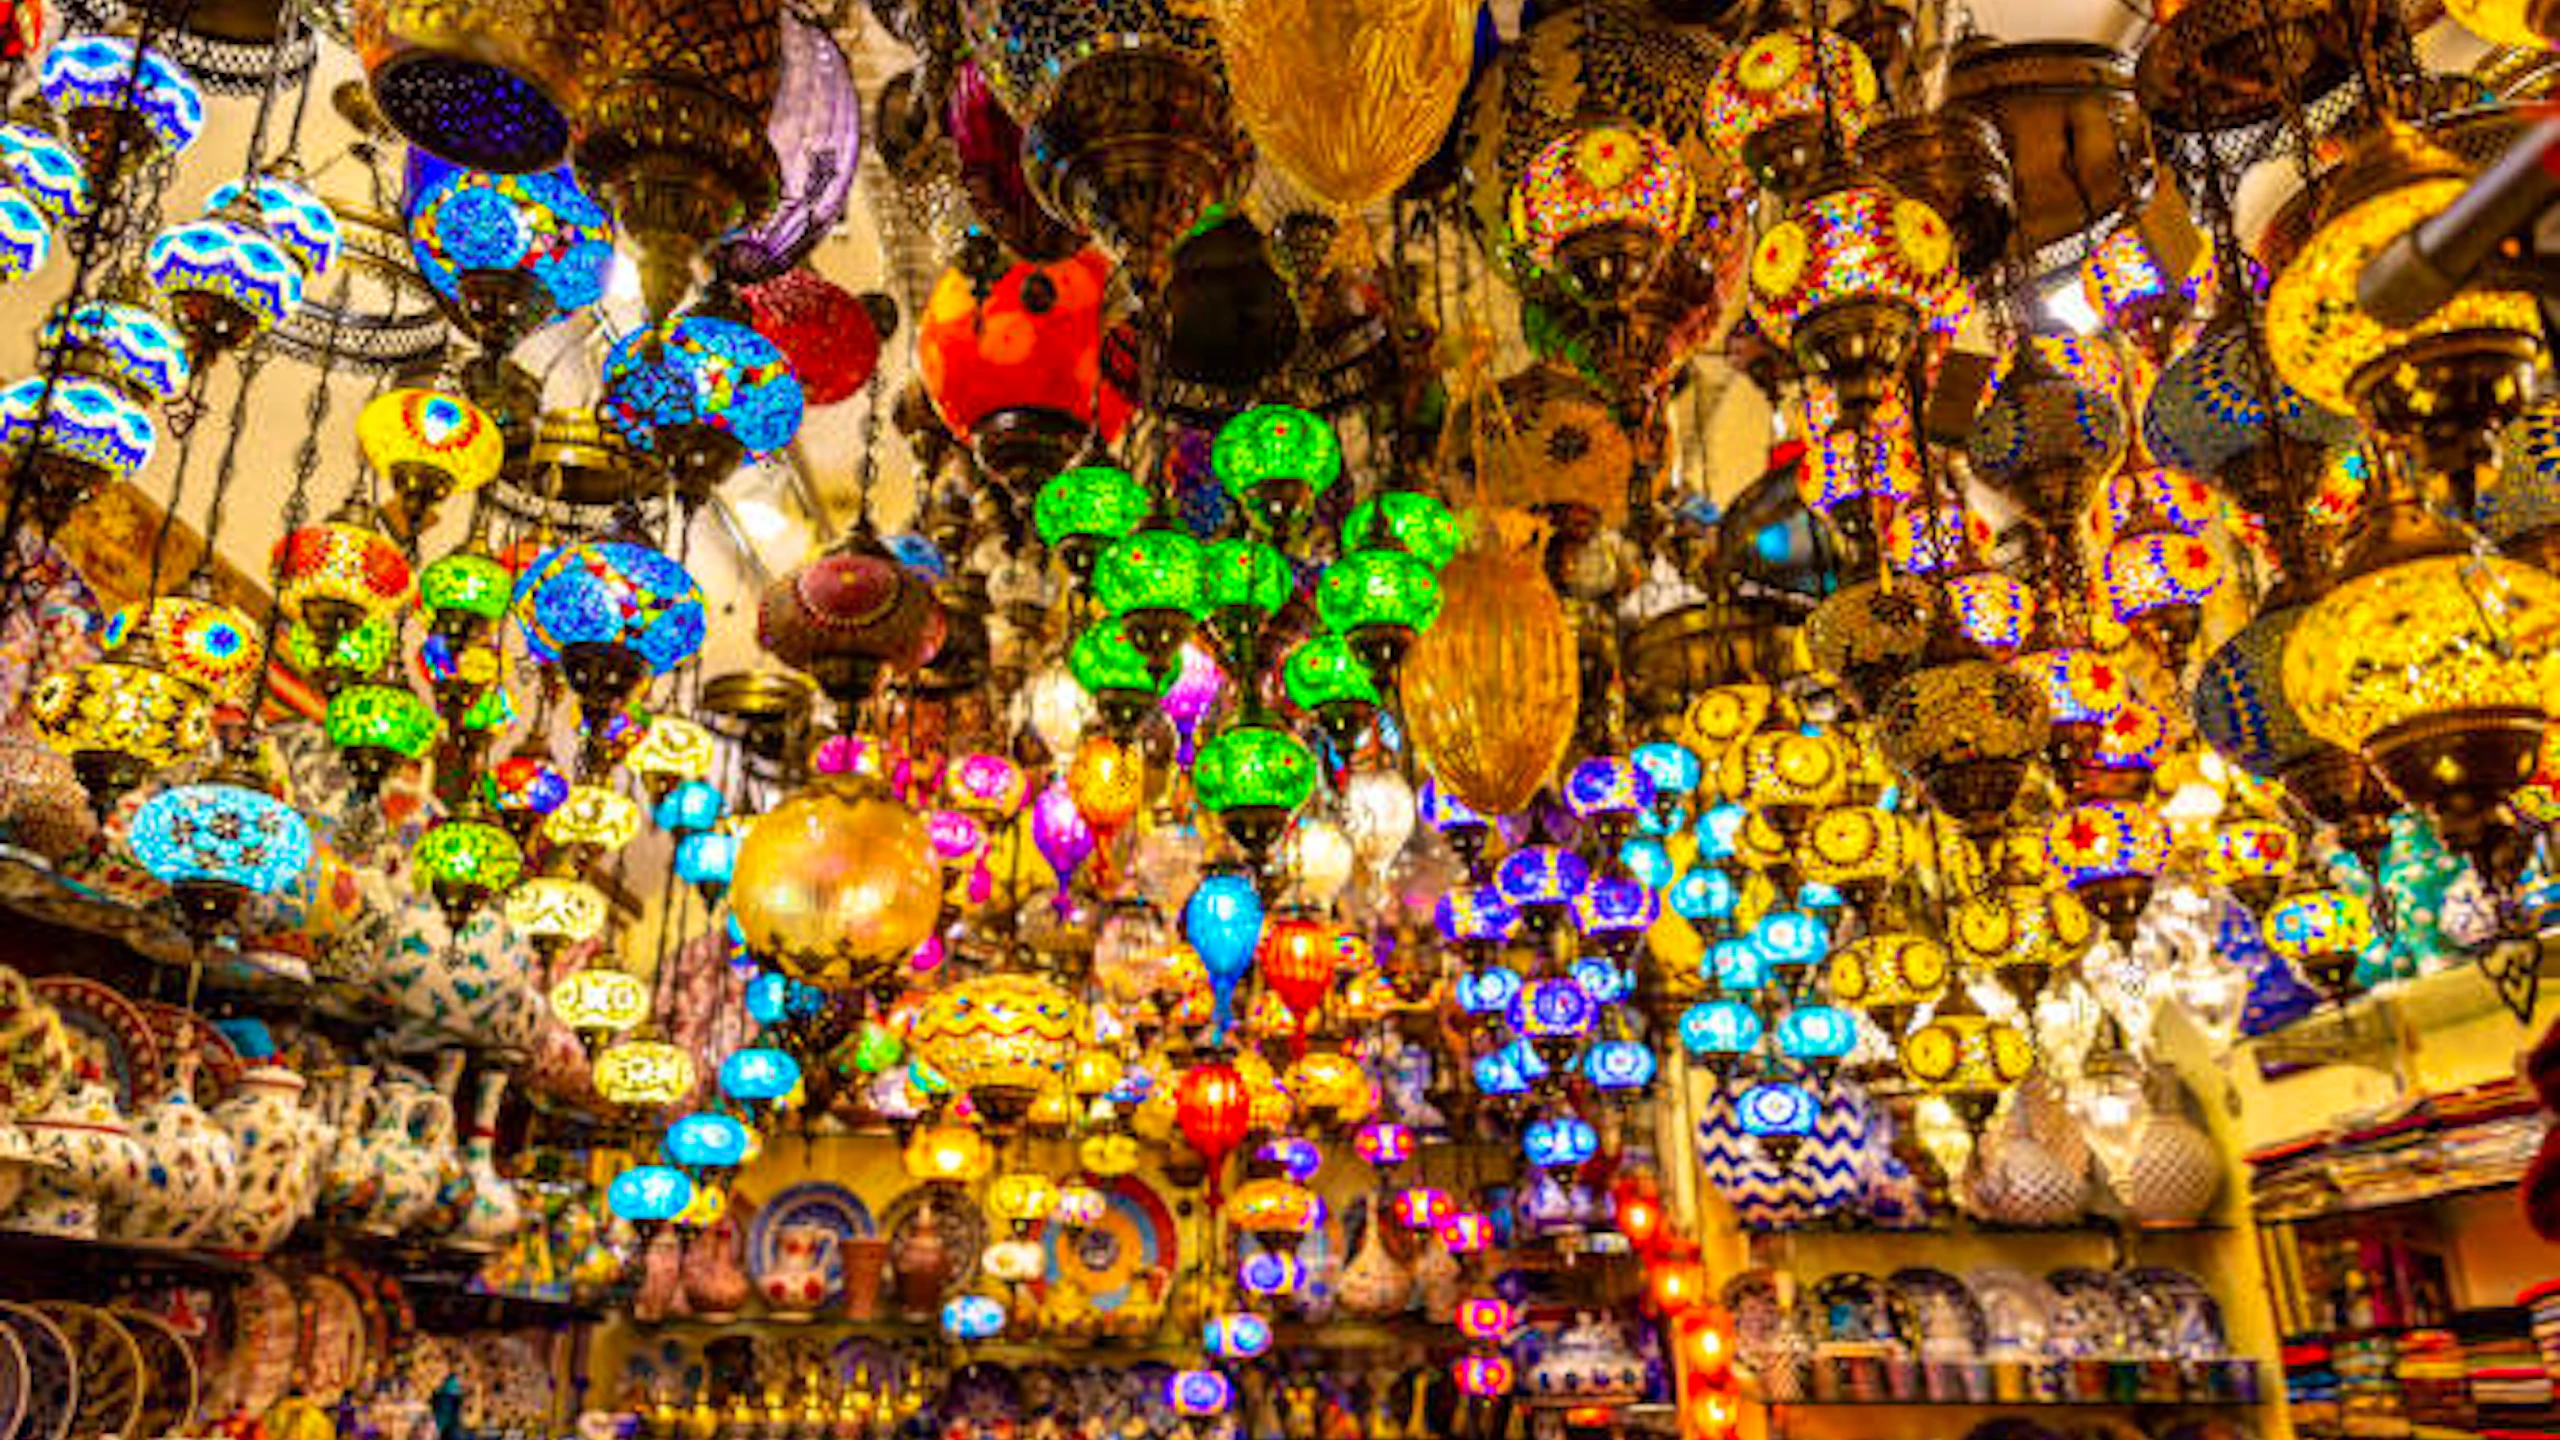 Grand Bazaar and Spice Market Tour Price